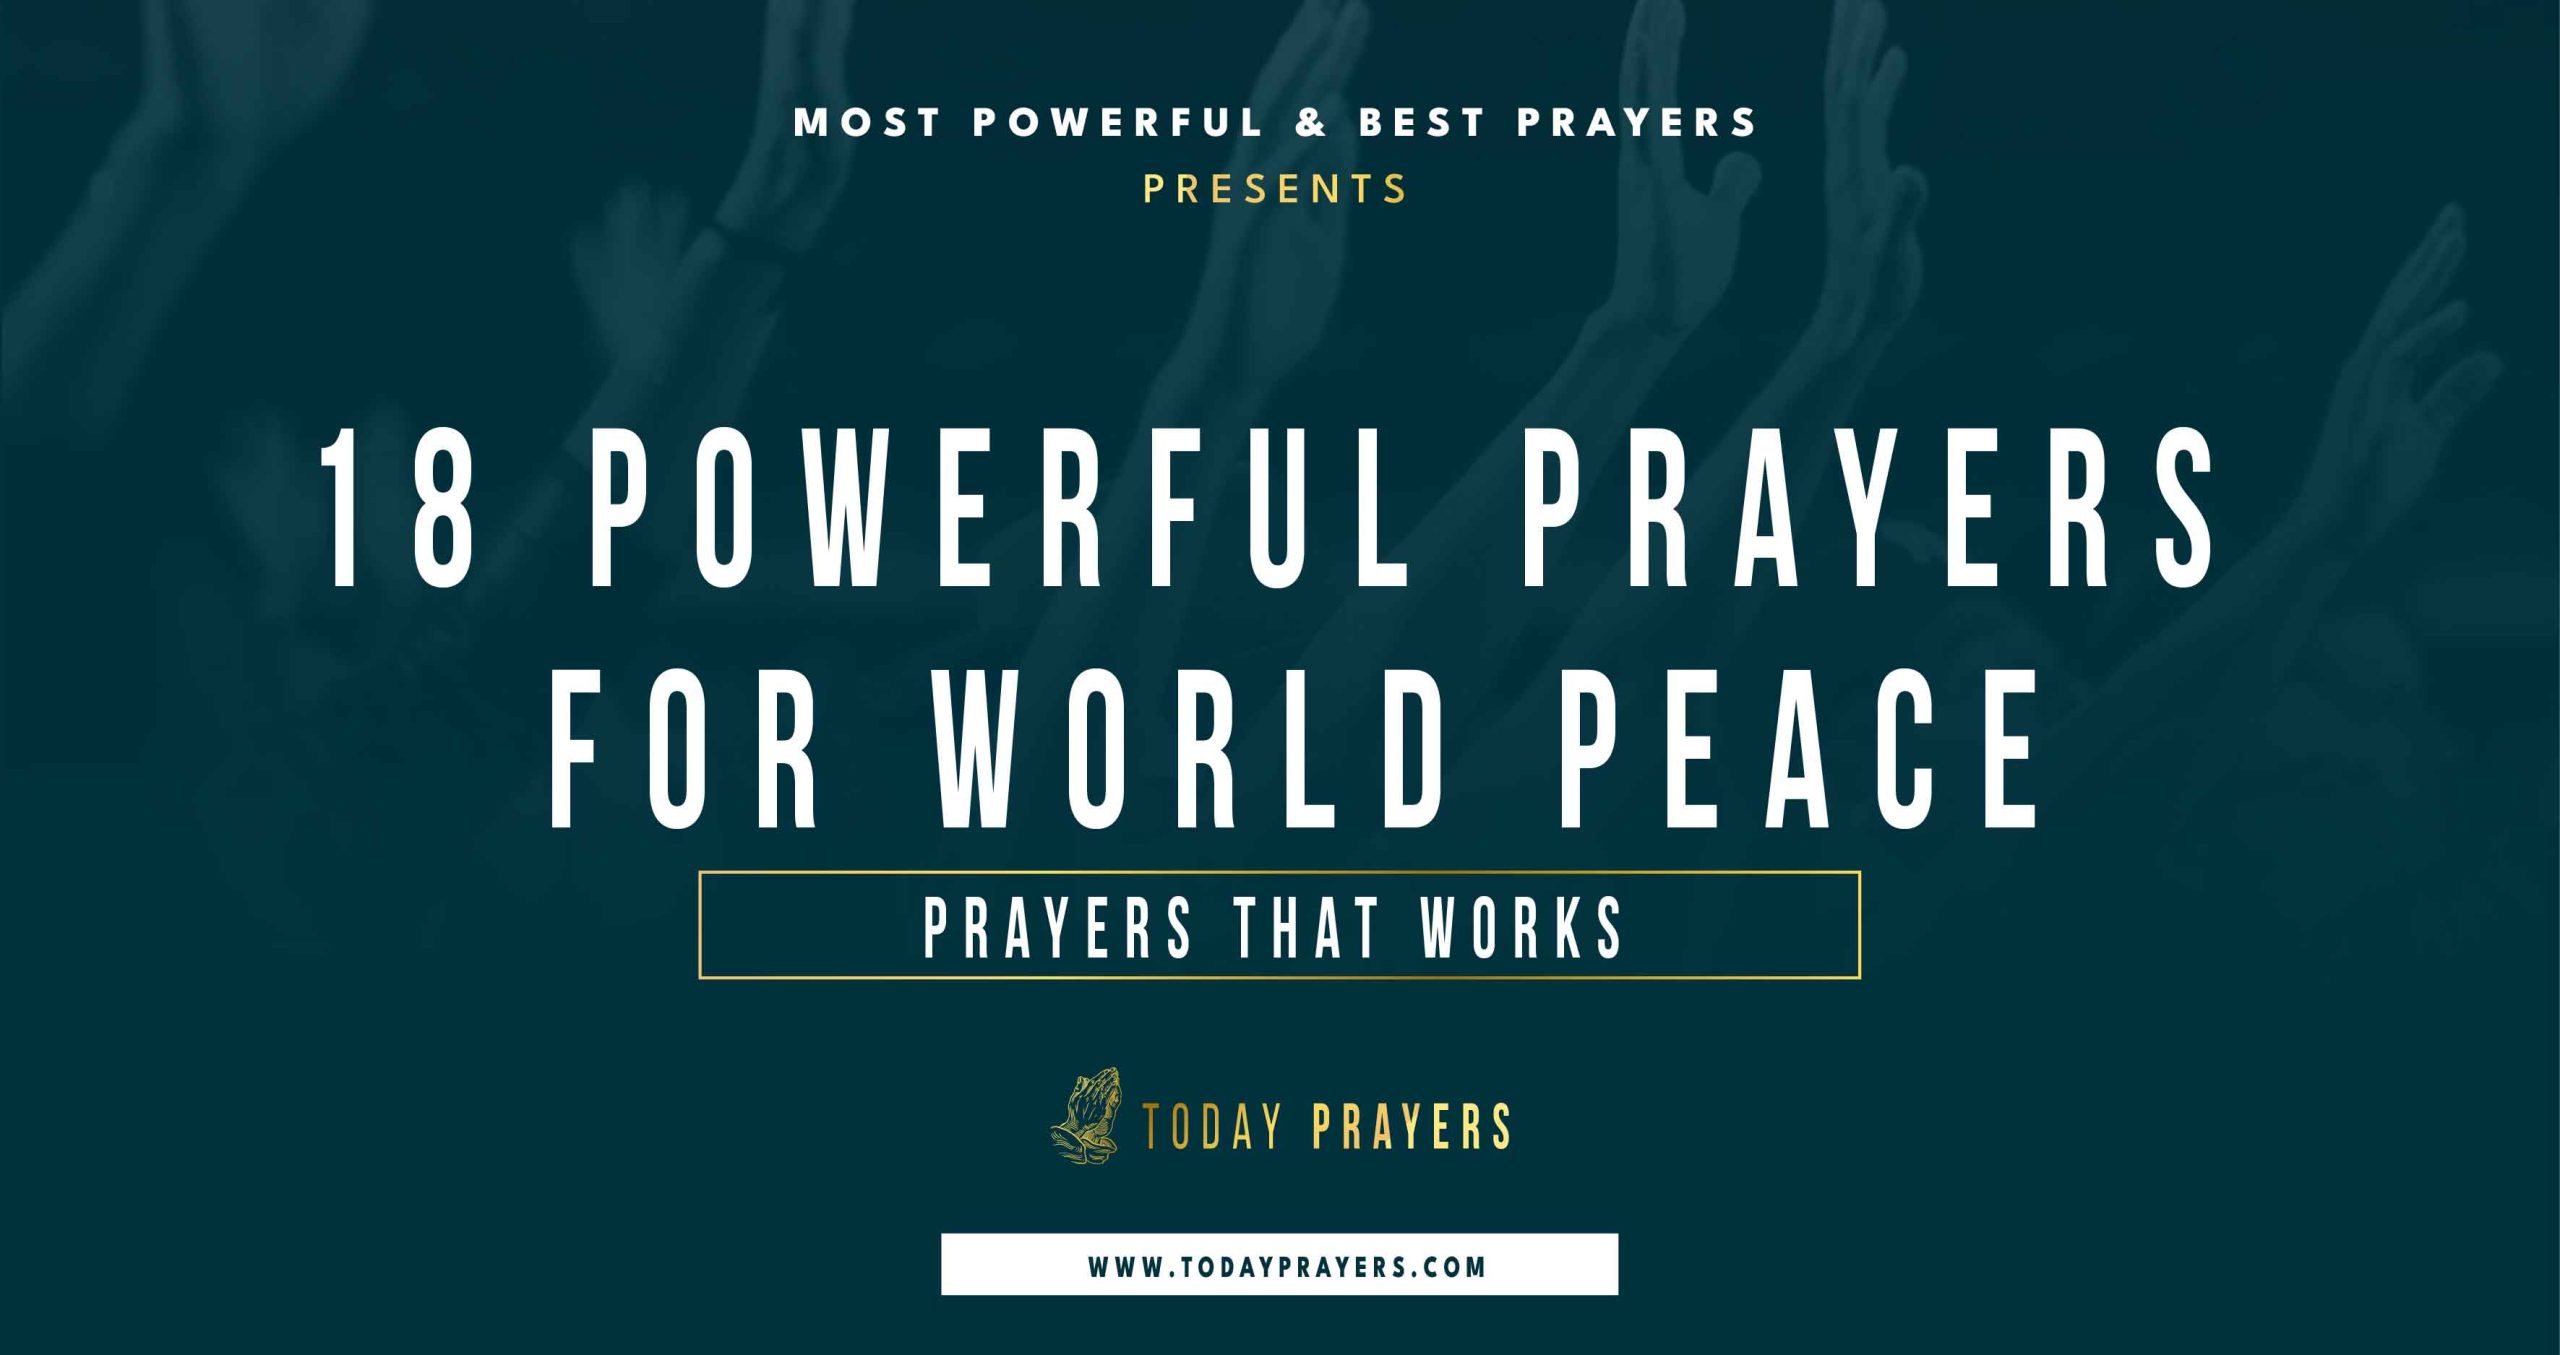 Prayers for World Peace